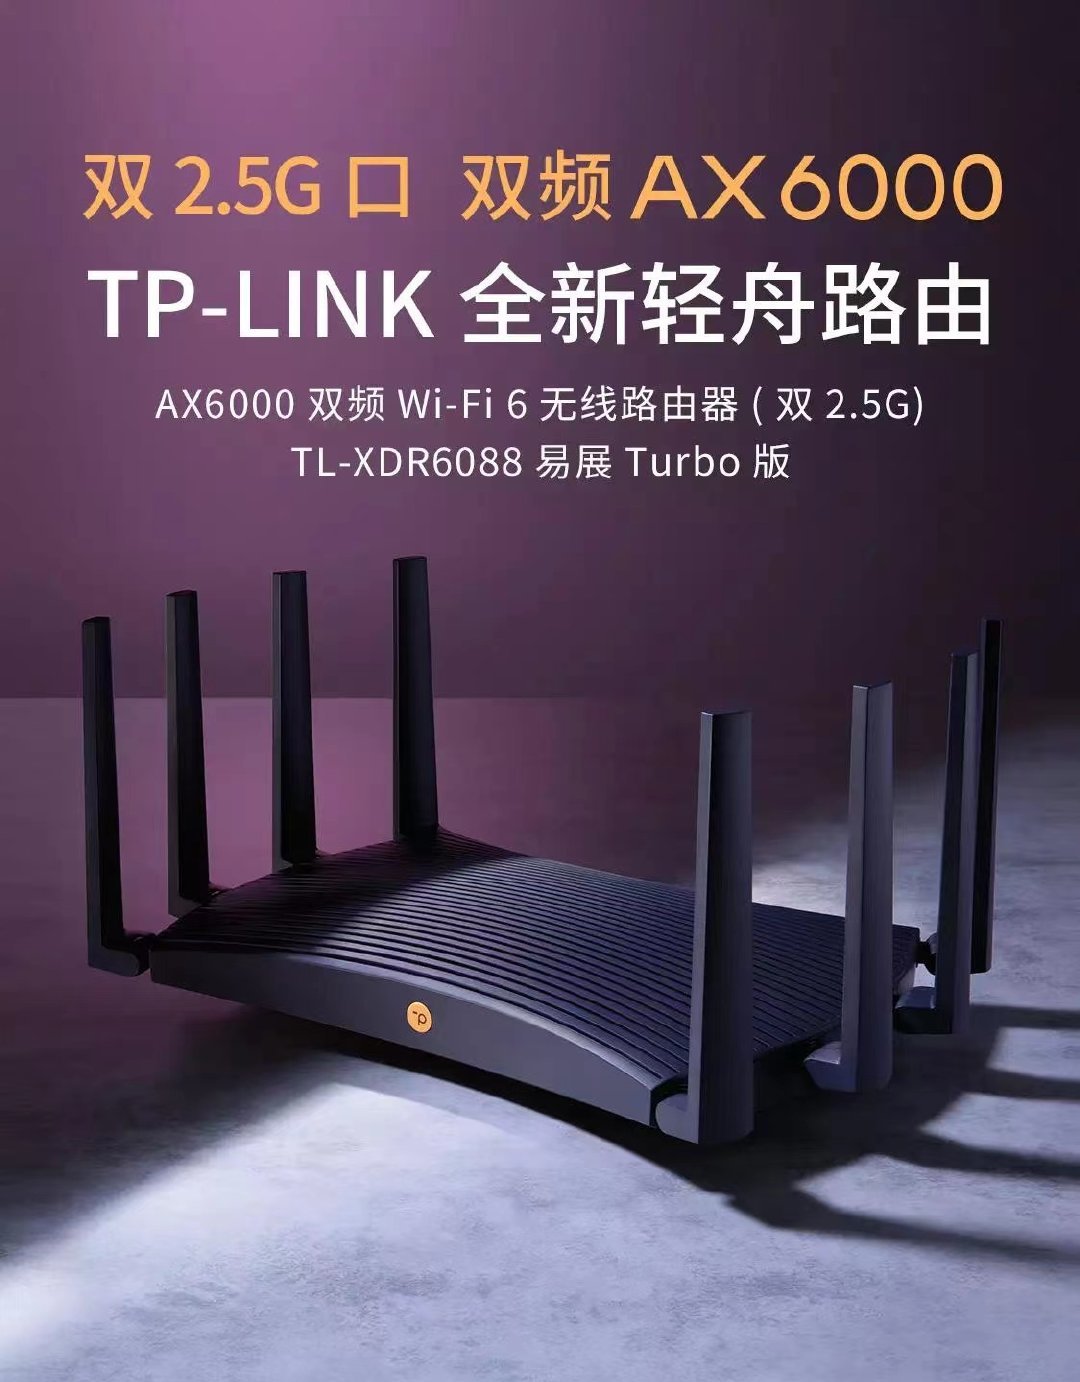 TP-LINK 轻舟 AX6000 路由上架：双 2.5G 网口、支持 Docker 功能